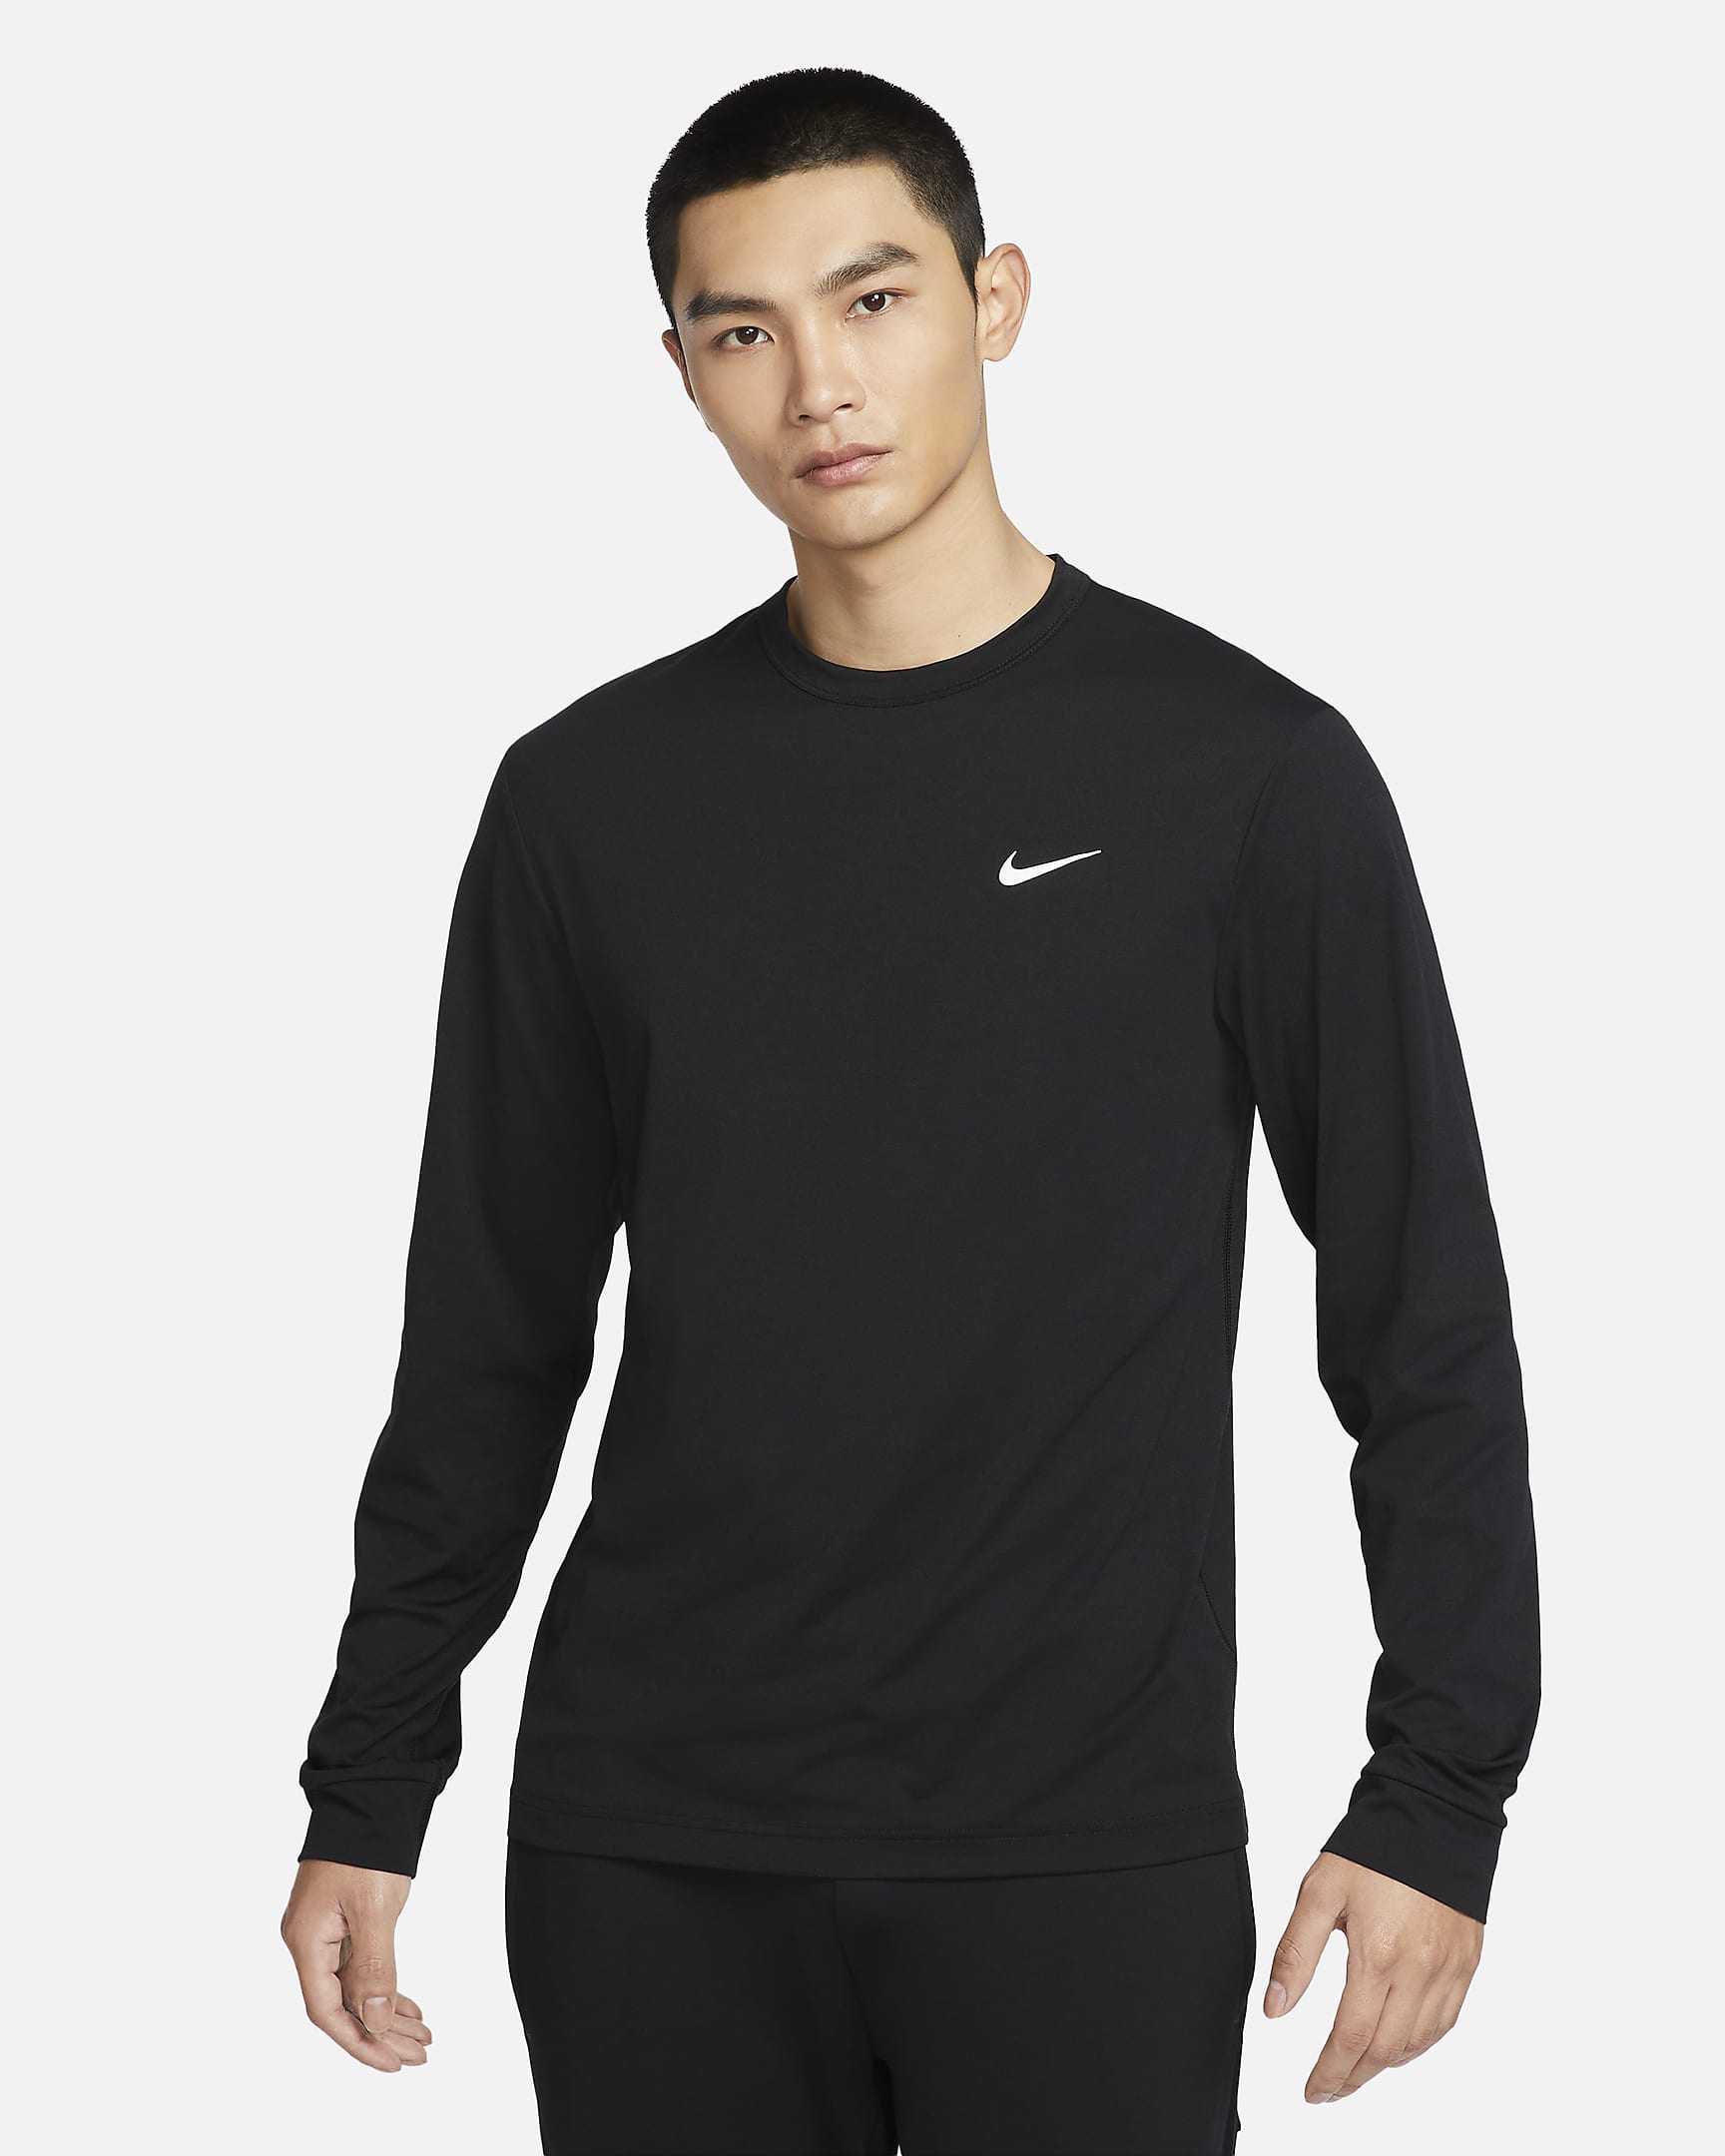 Nike Dri-FIT UV Hyverse Men's Long-Sleeve Fitness Top. Nike SG